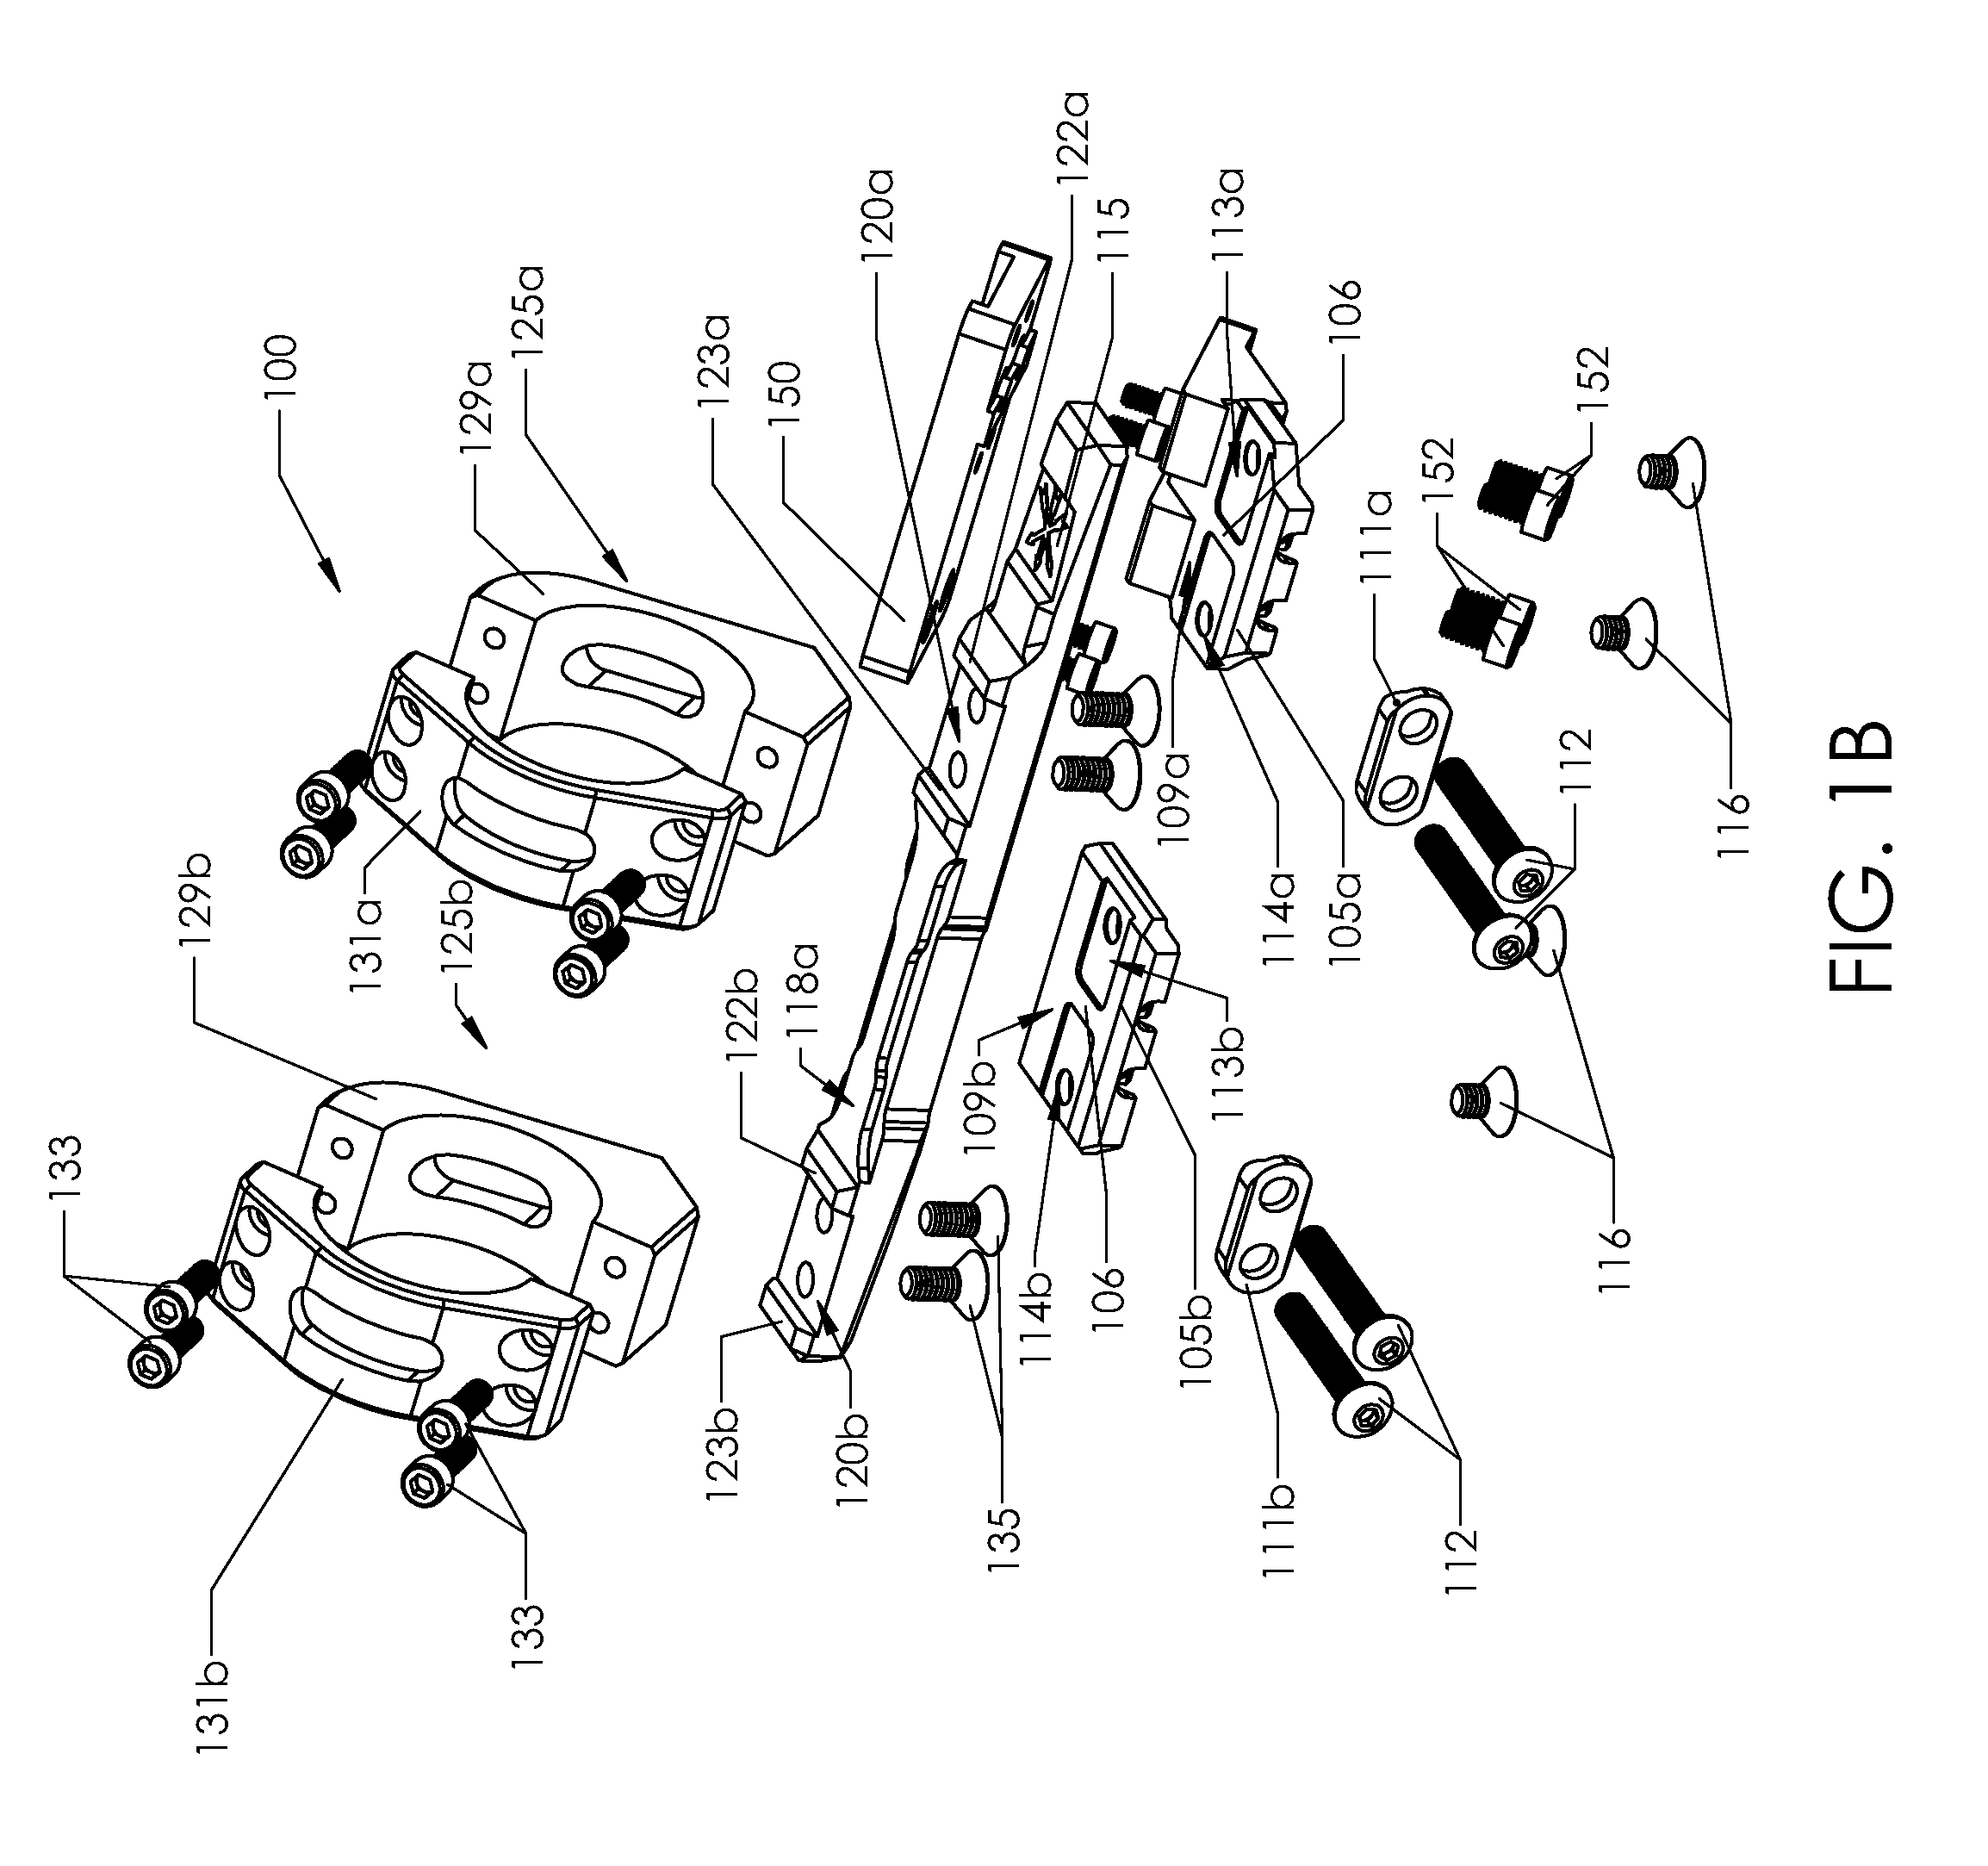 Modular scope mount assembly